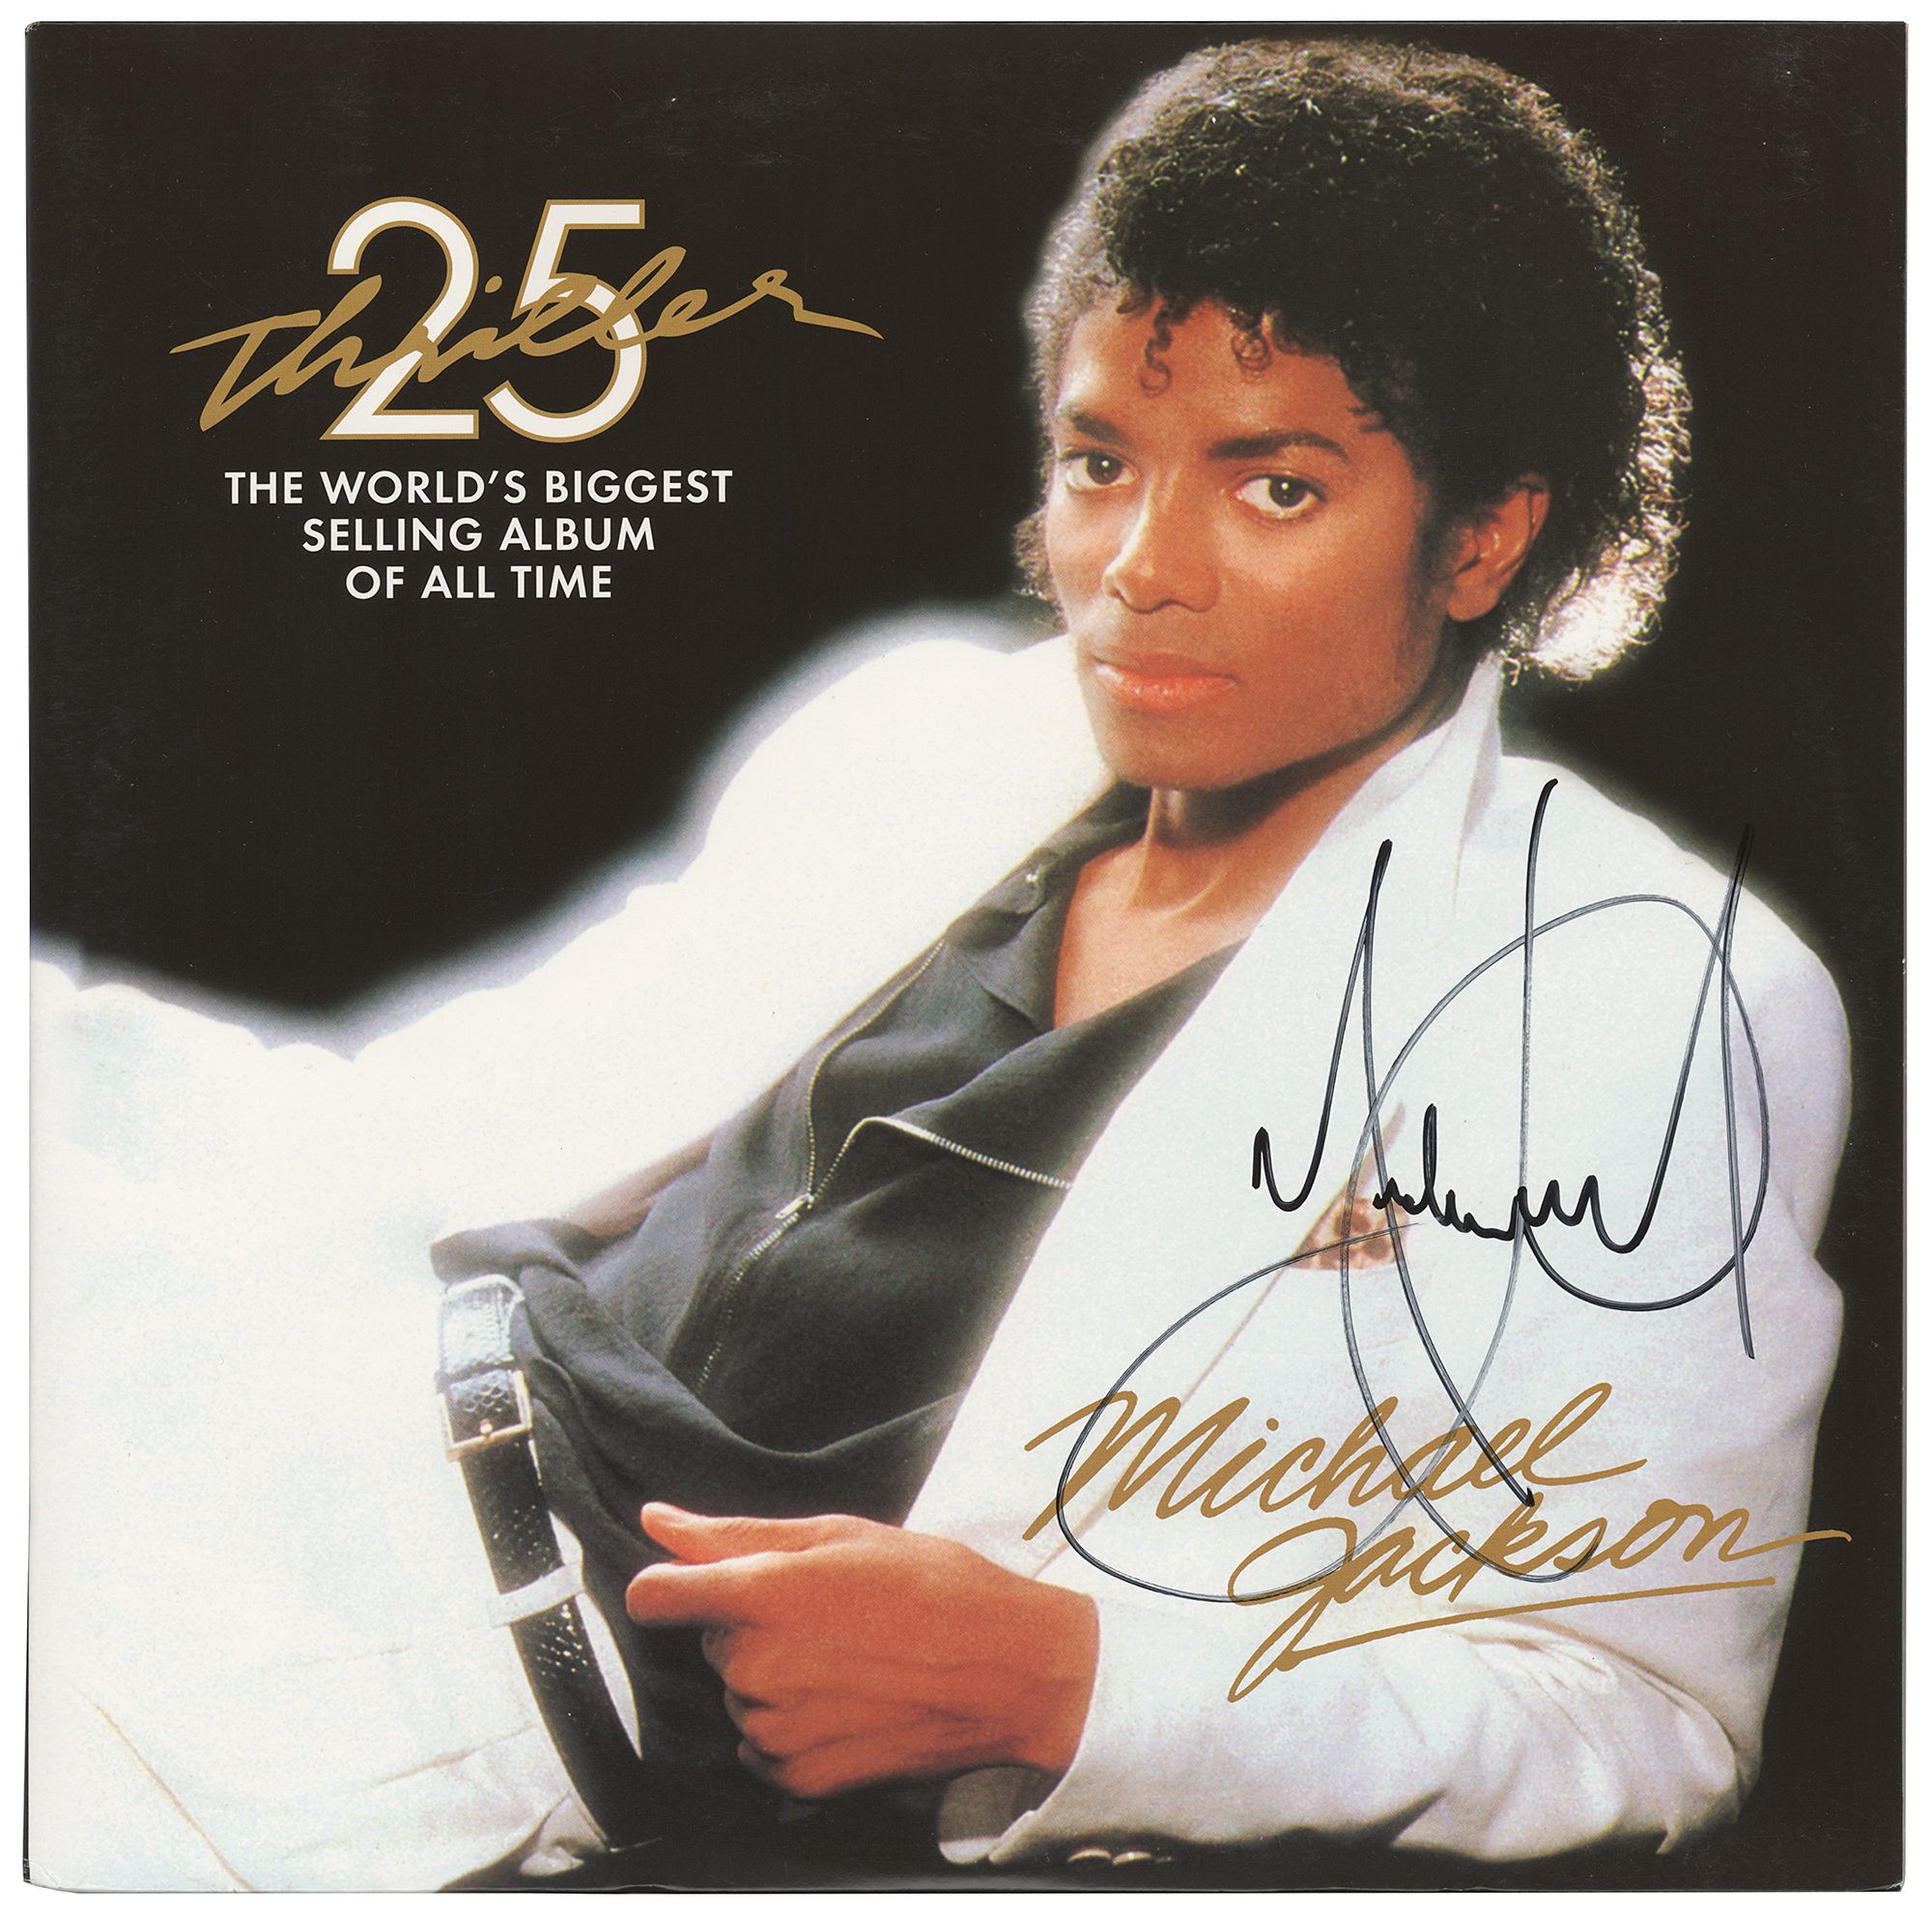 Lot #5396 Michael Jackson Signed Album